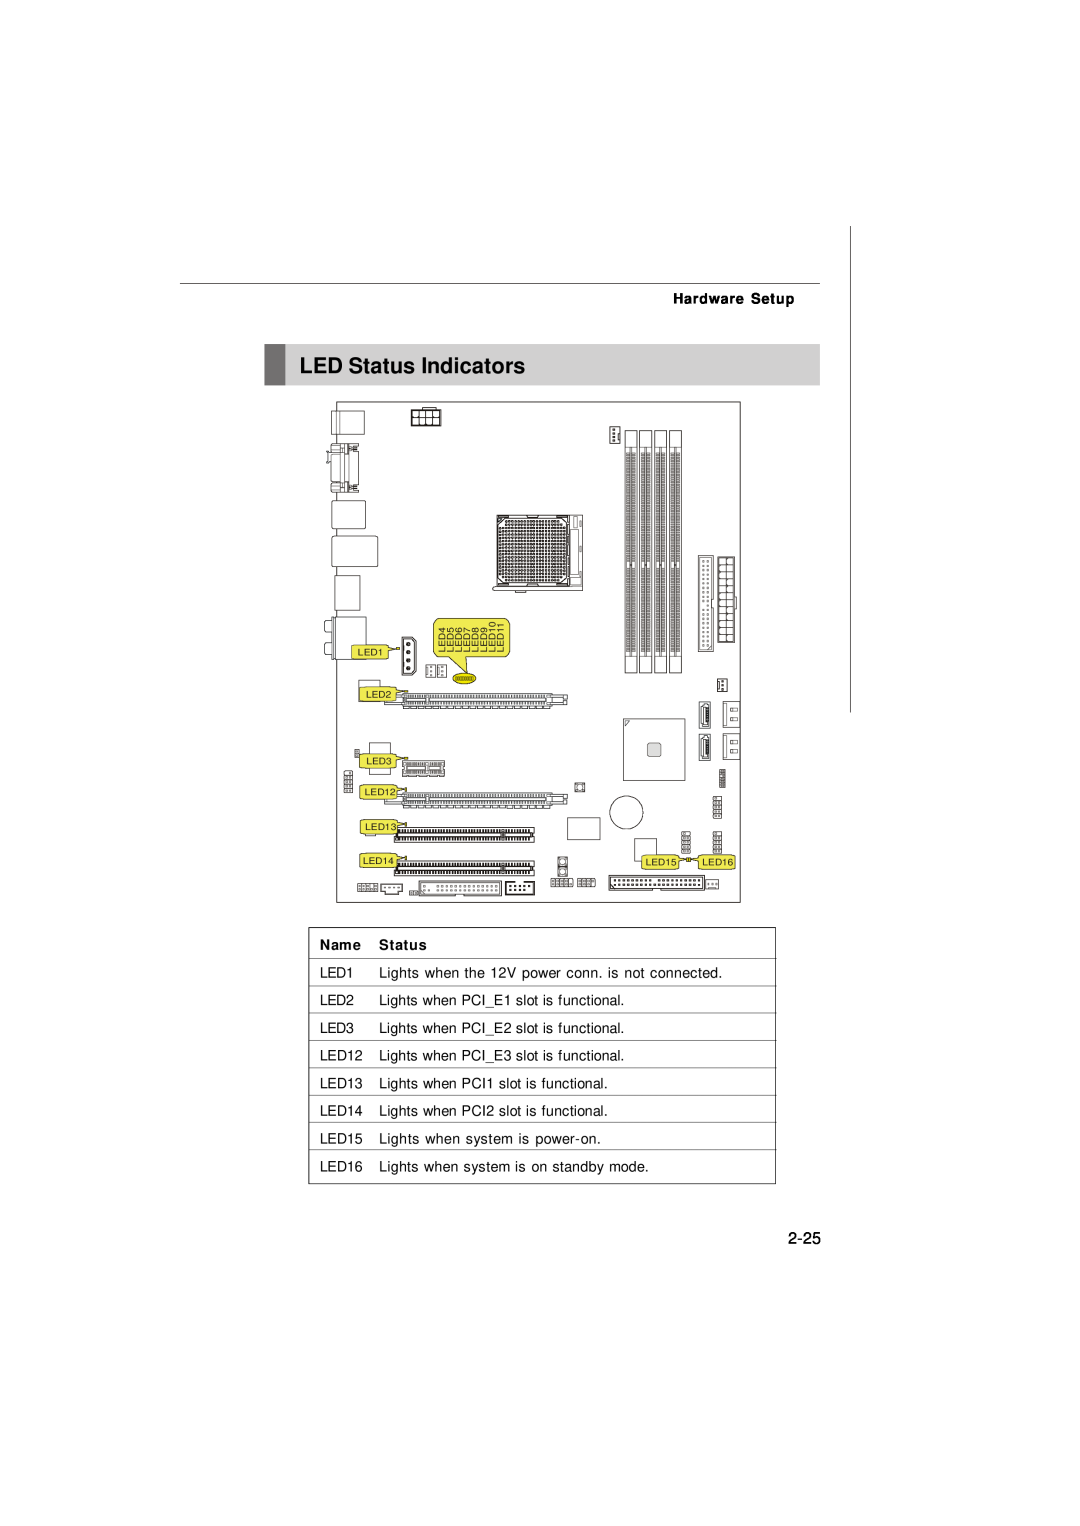 Nvidia MS-7374 manual LED Status Indicators, 2-25, Name, Hardware Setup 